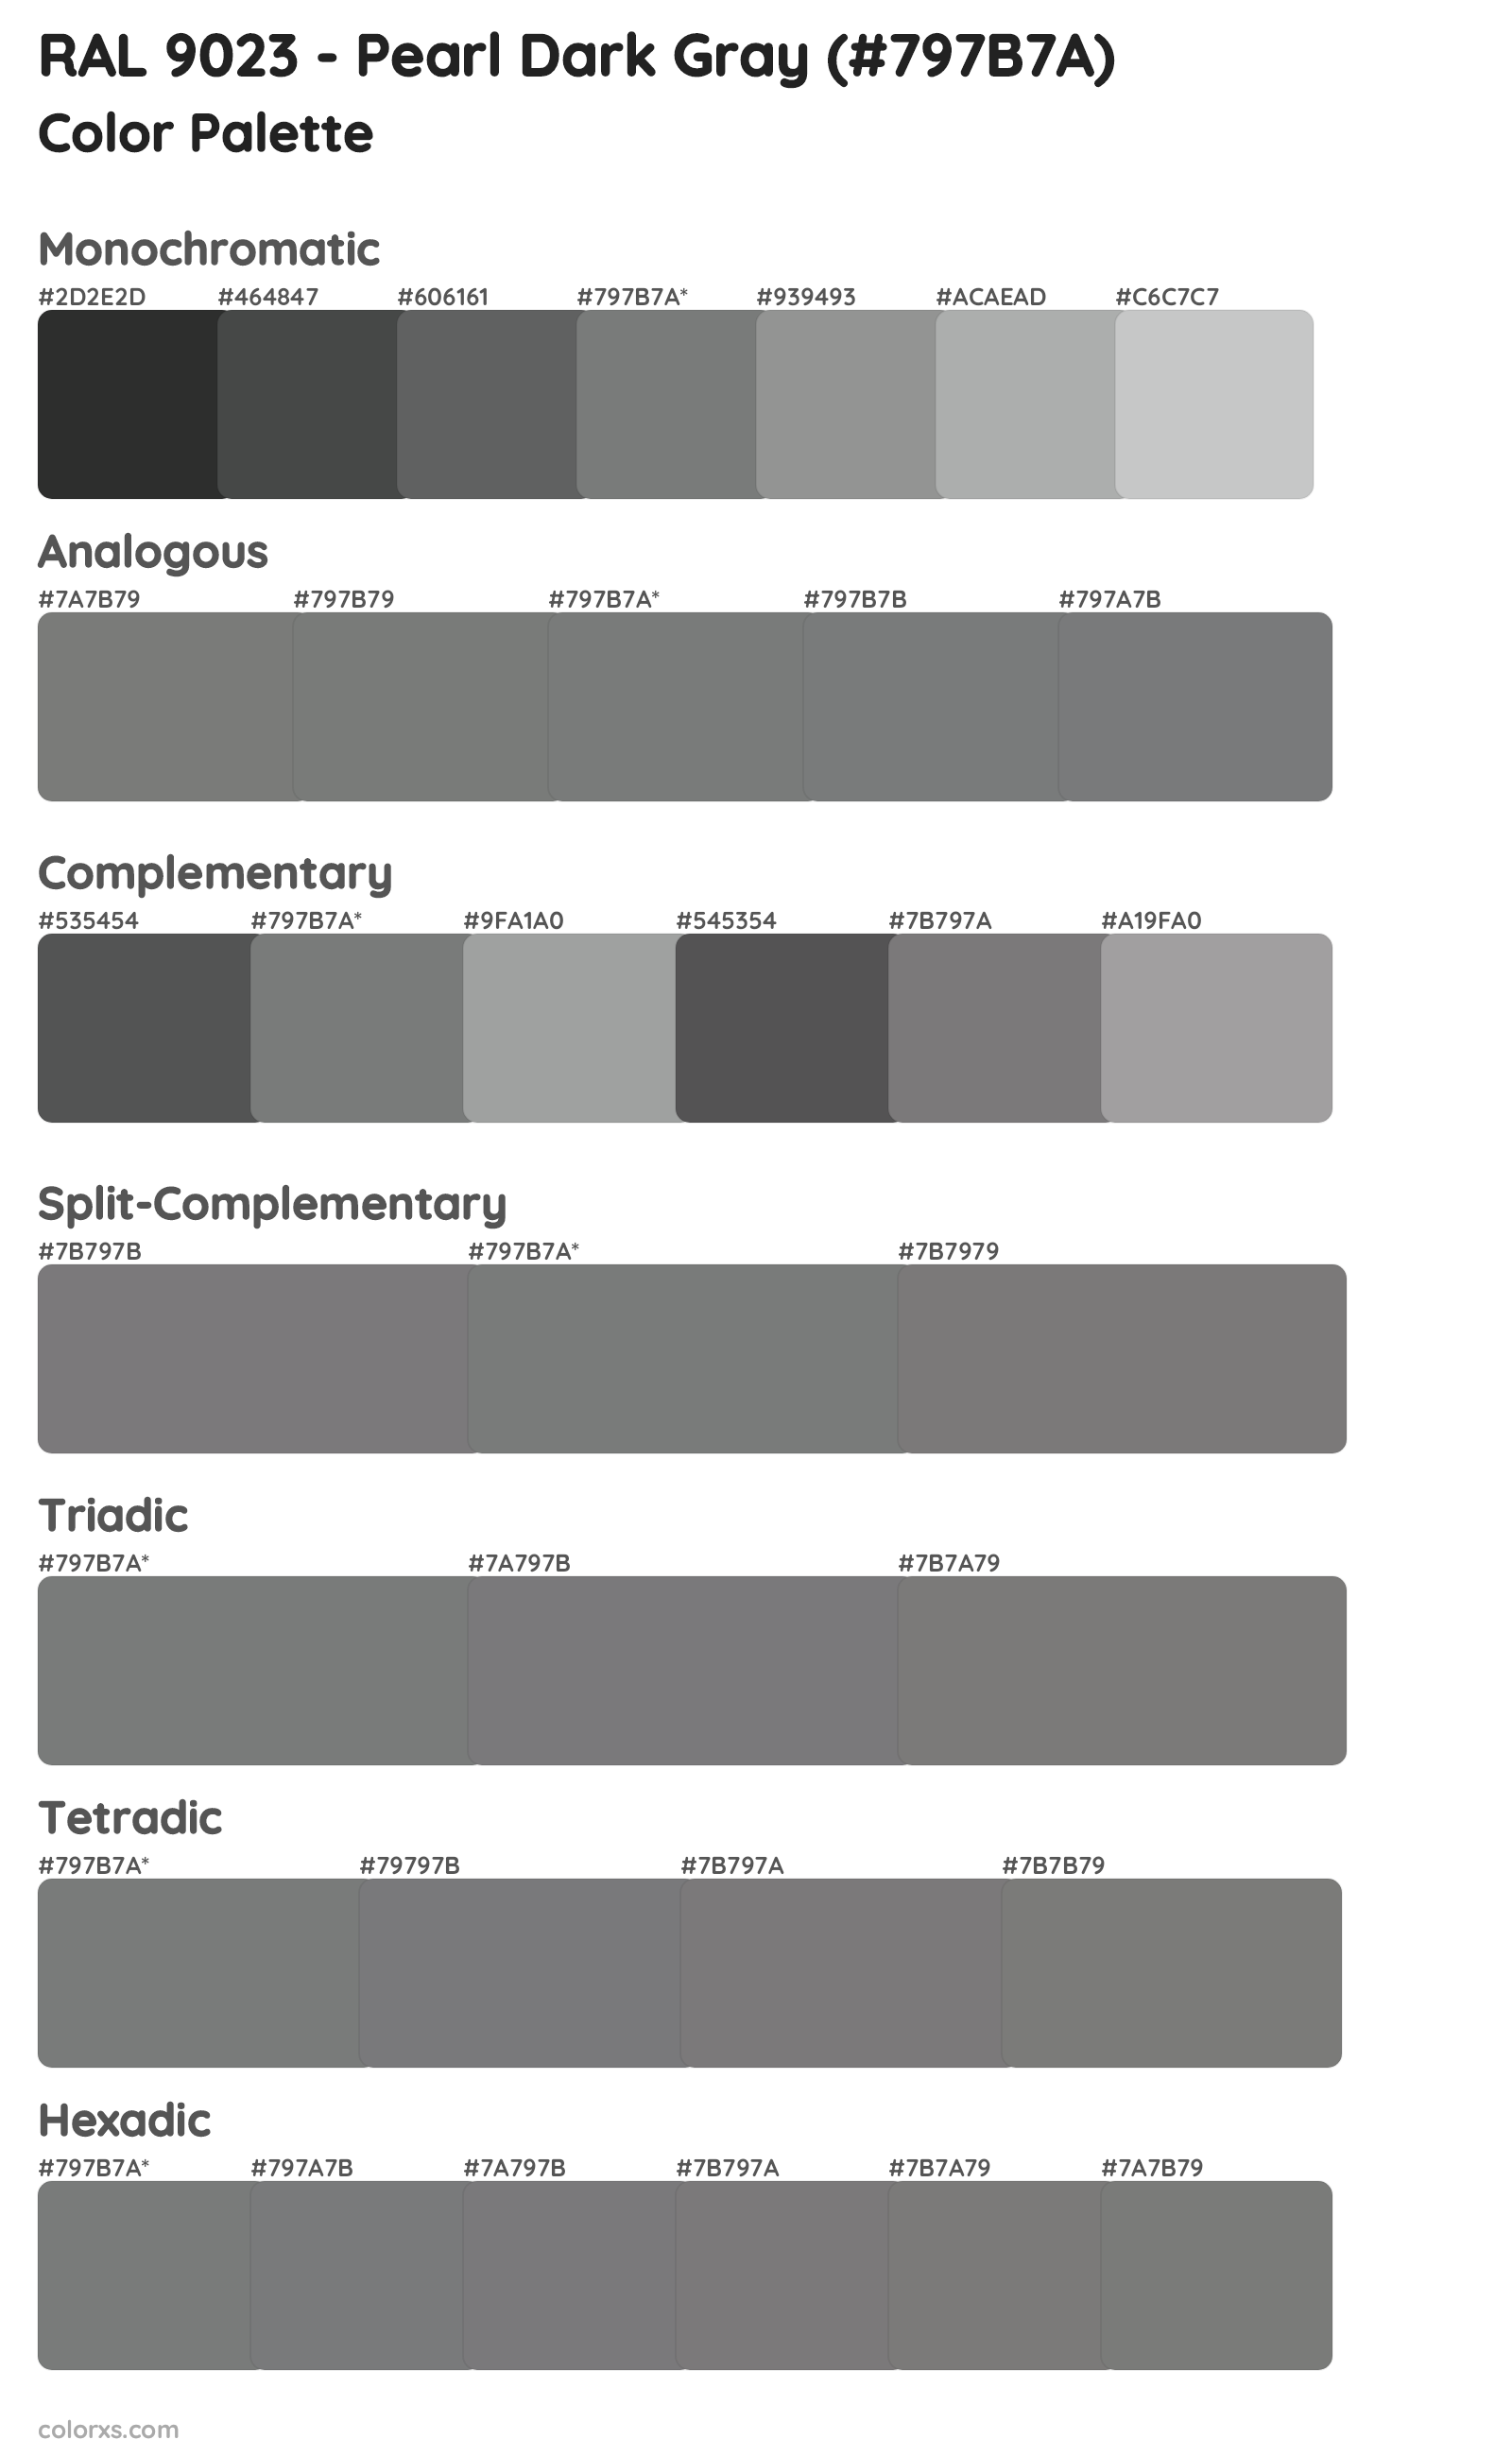 RAL 9023 - Pearl Dark Gray Color Scheme Palettes